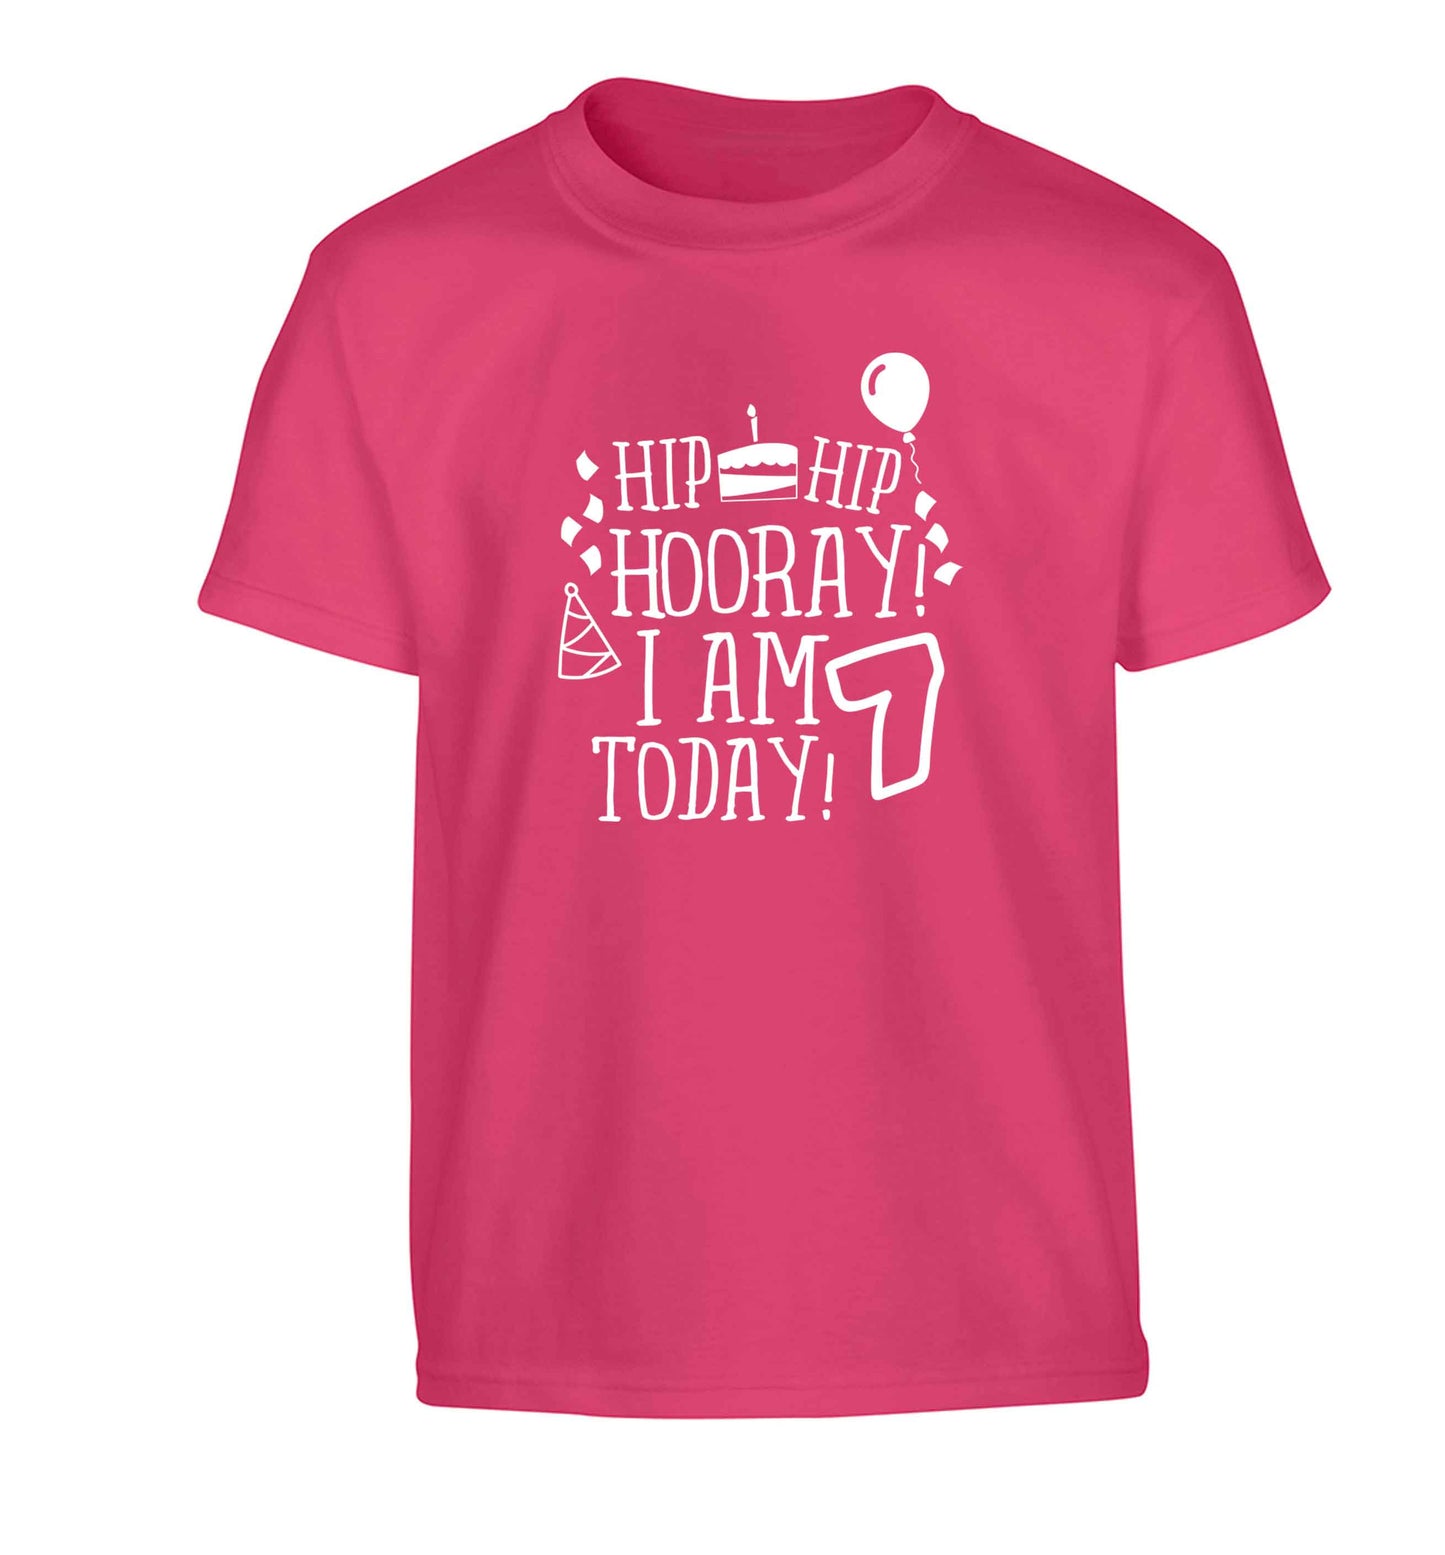 Hip hip I am seven today! Children's pink Tshirt 12-13 Years